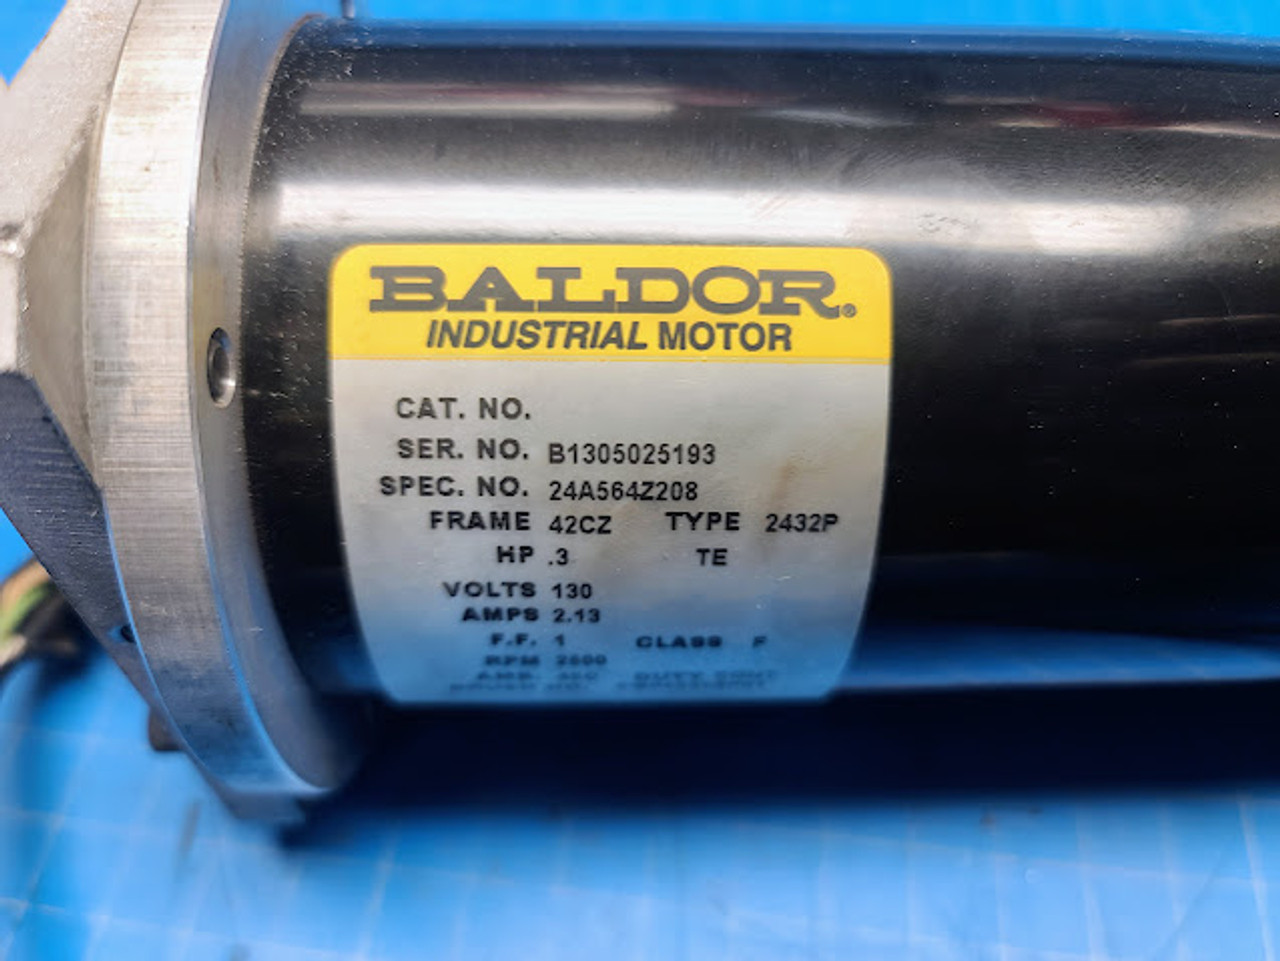 Baldor 130V .3HP 2.13A 2432P 42CZ Frame Industrial Motor 24A564Z208